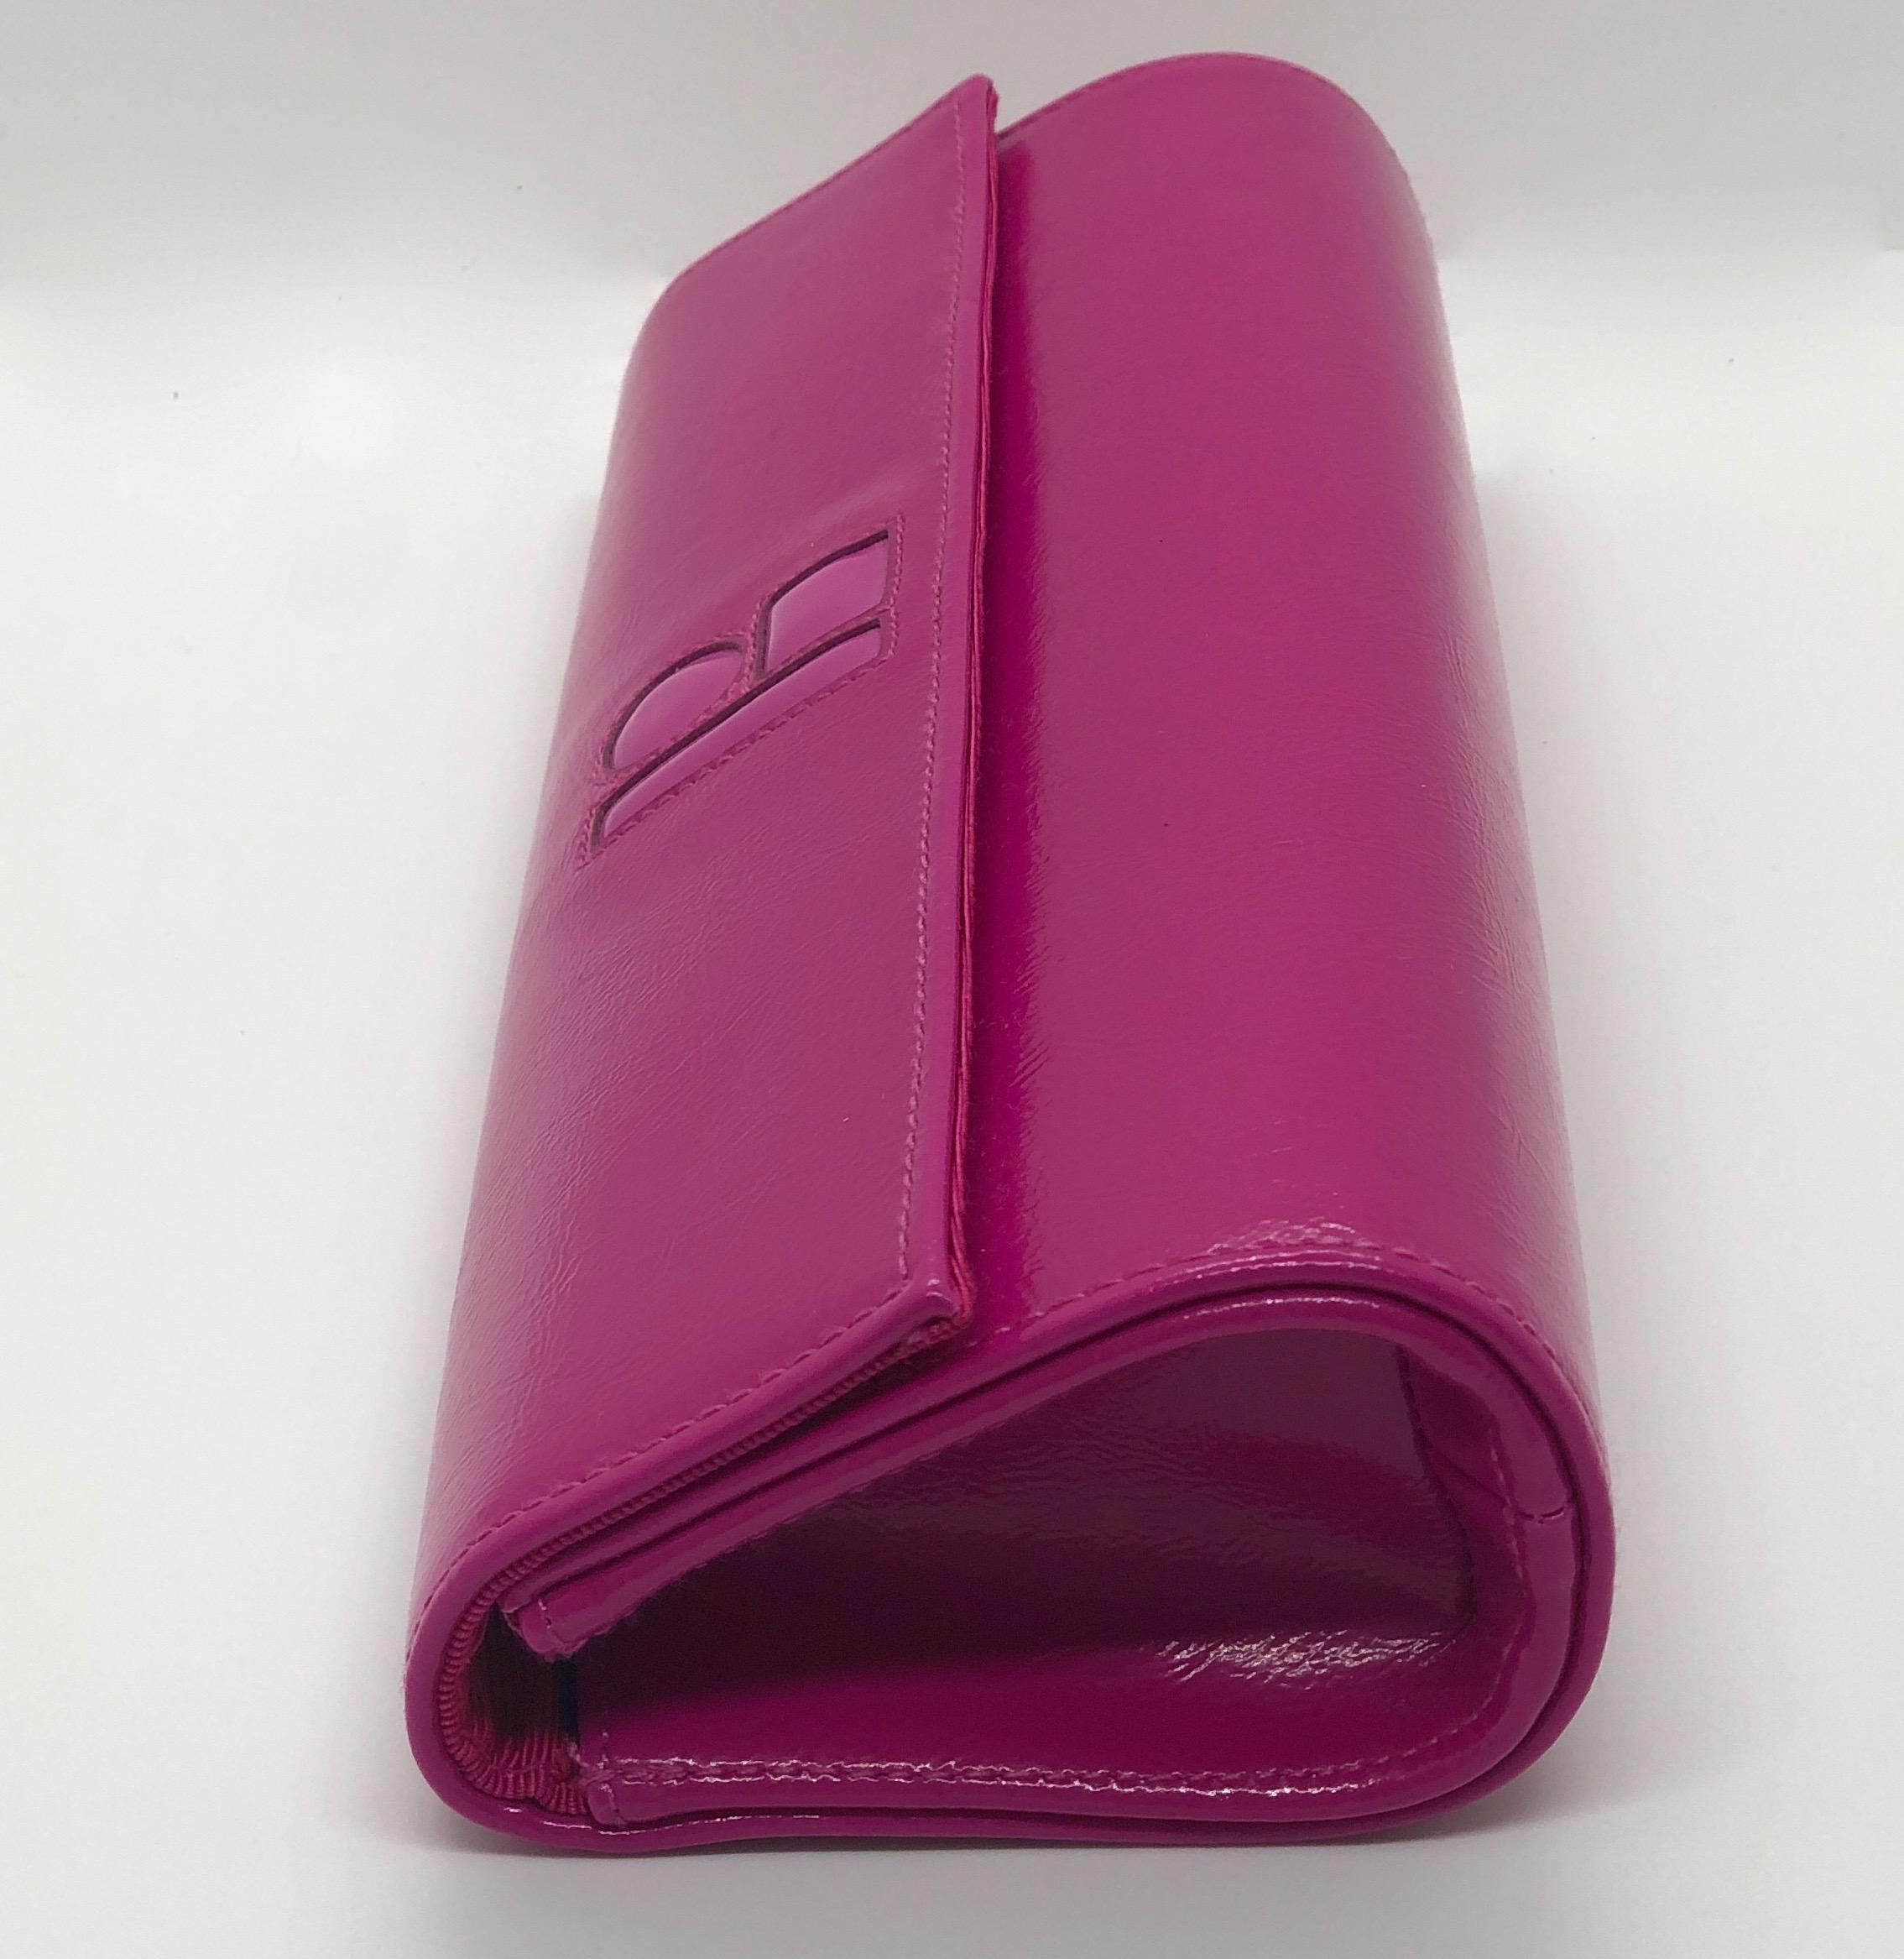 Lisa Perry Mod Fuchsia Pink Patent Leather Clutch Handbag w/ Magnetic Closure  5